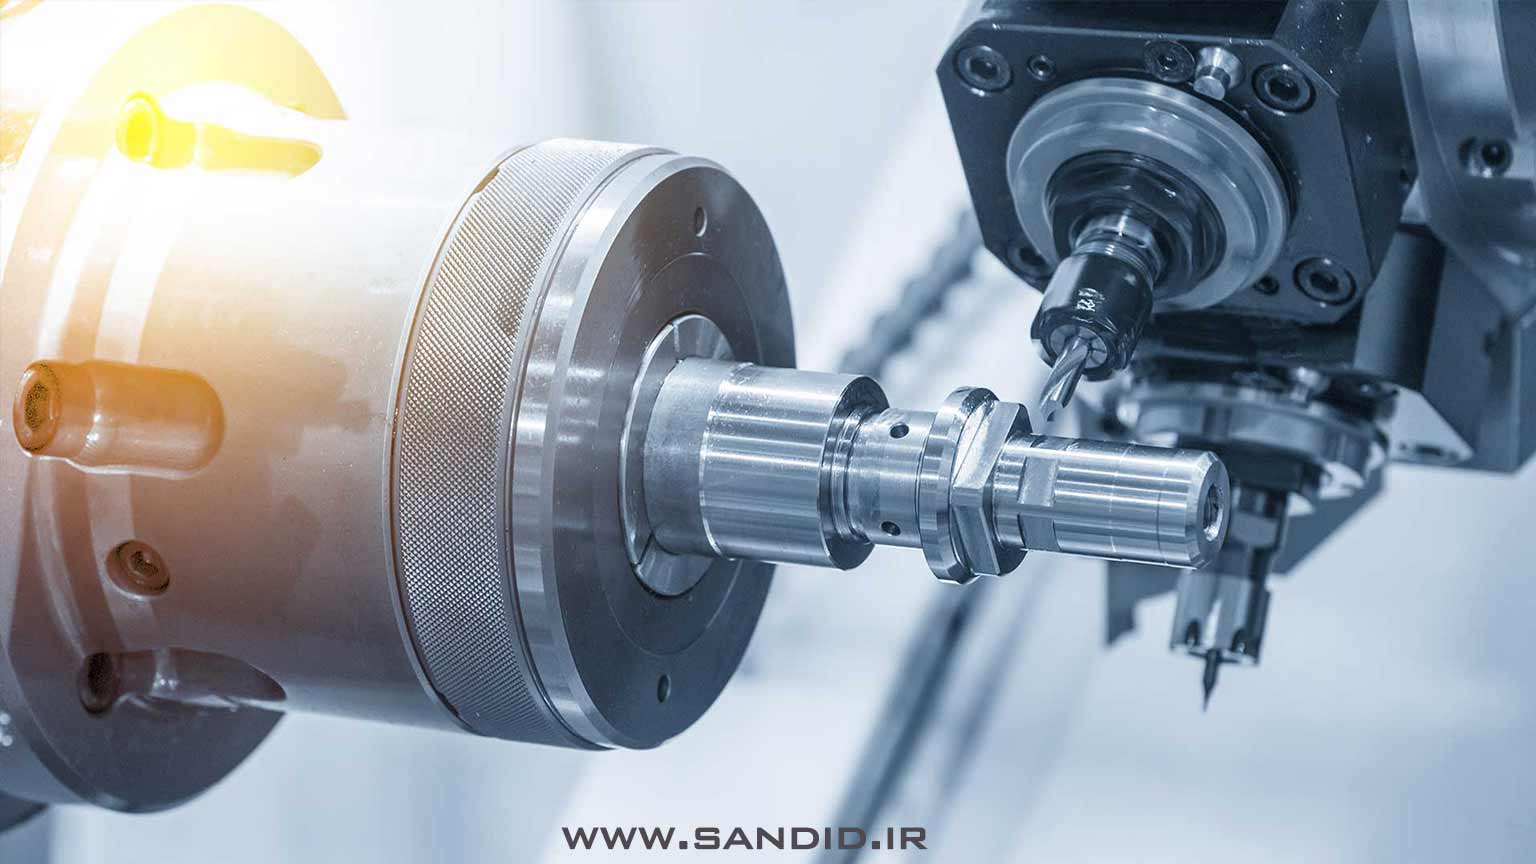 sandid-manual-machining-company